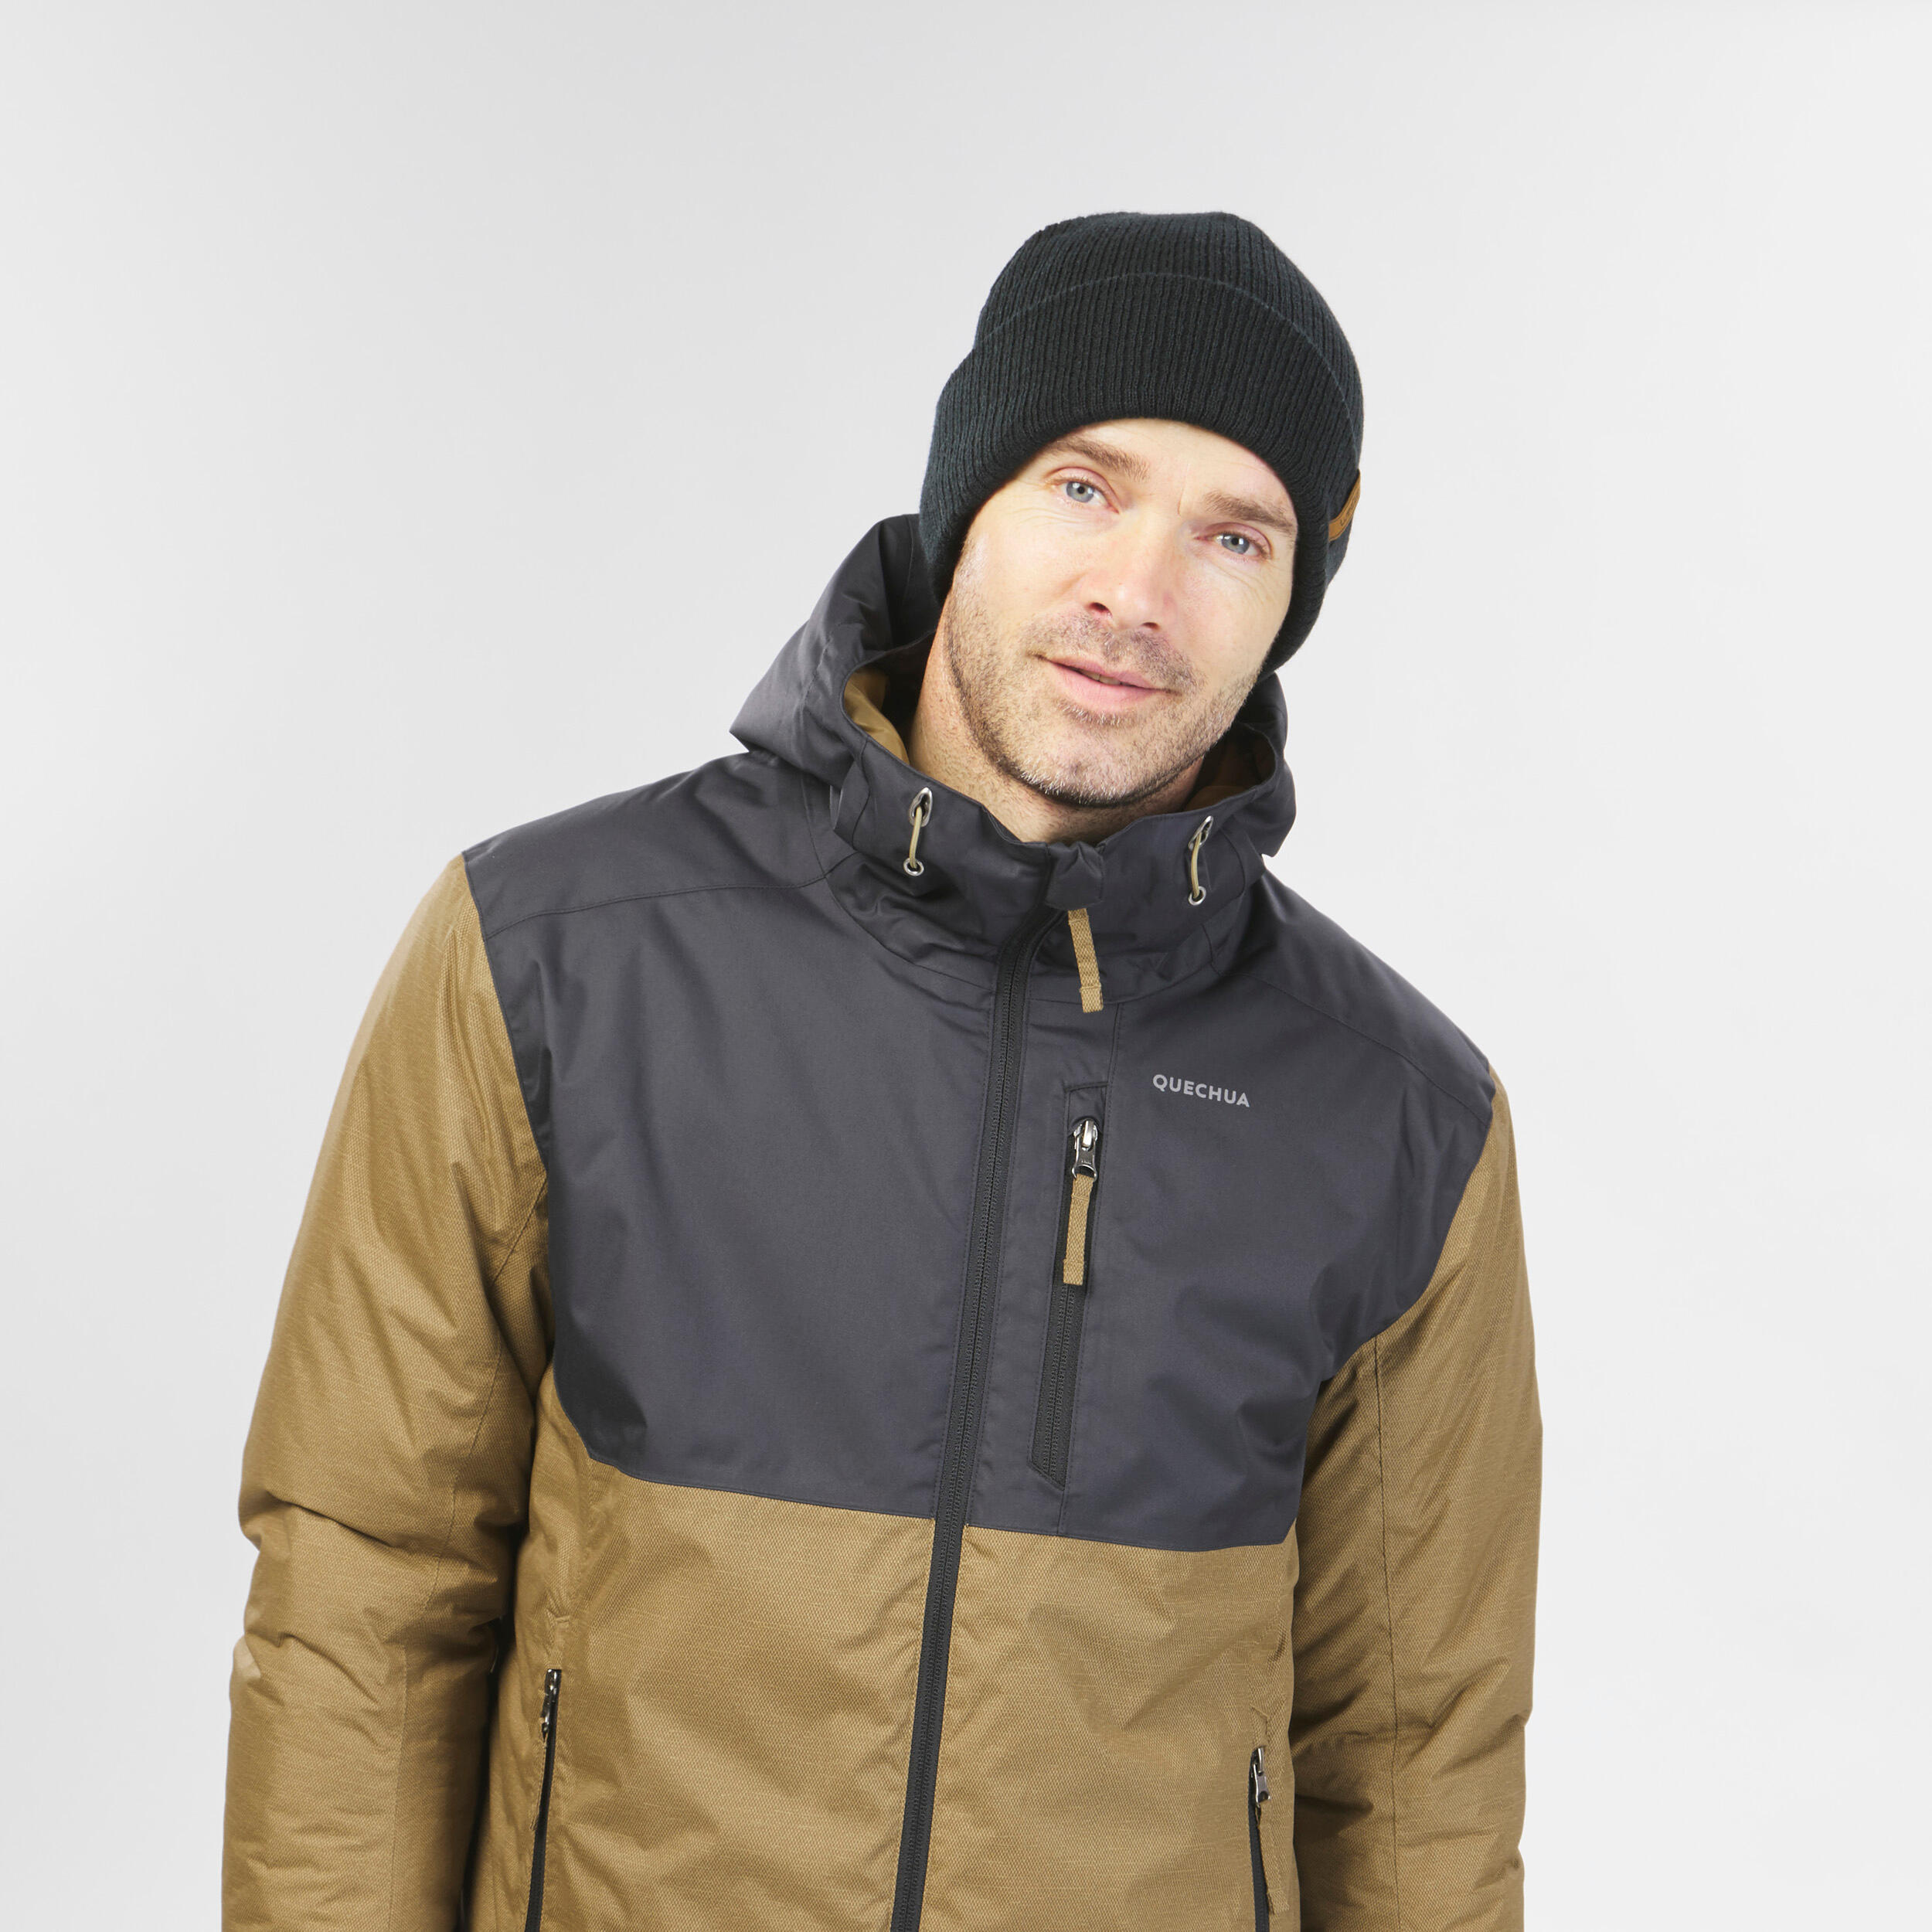 Men’s hiking waterproof winter jacket - SH500 -10°C 6/20